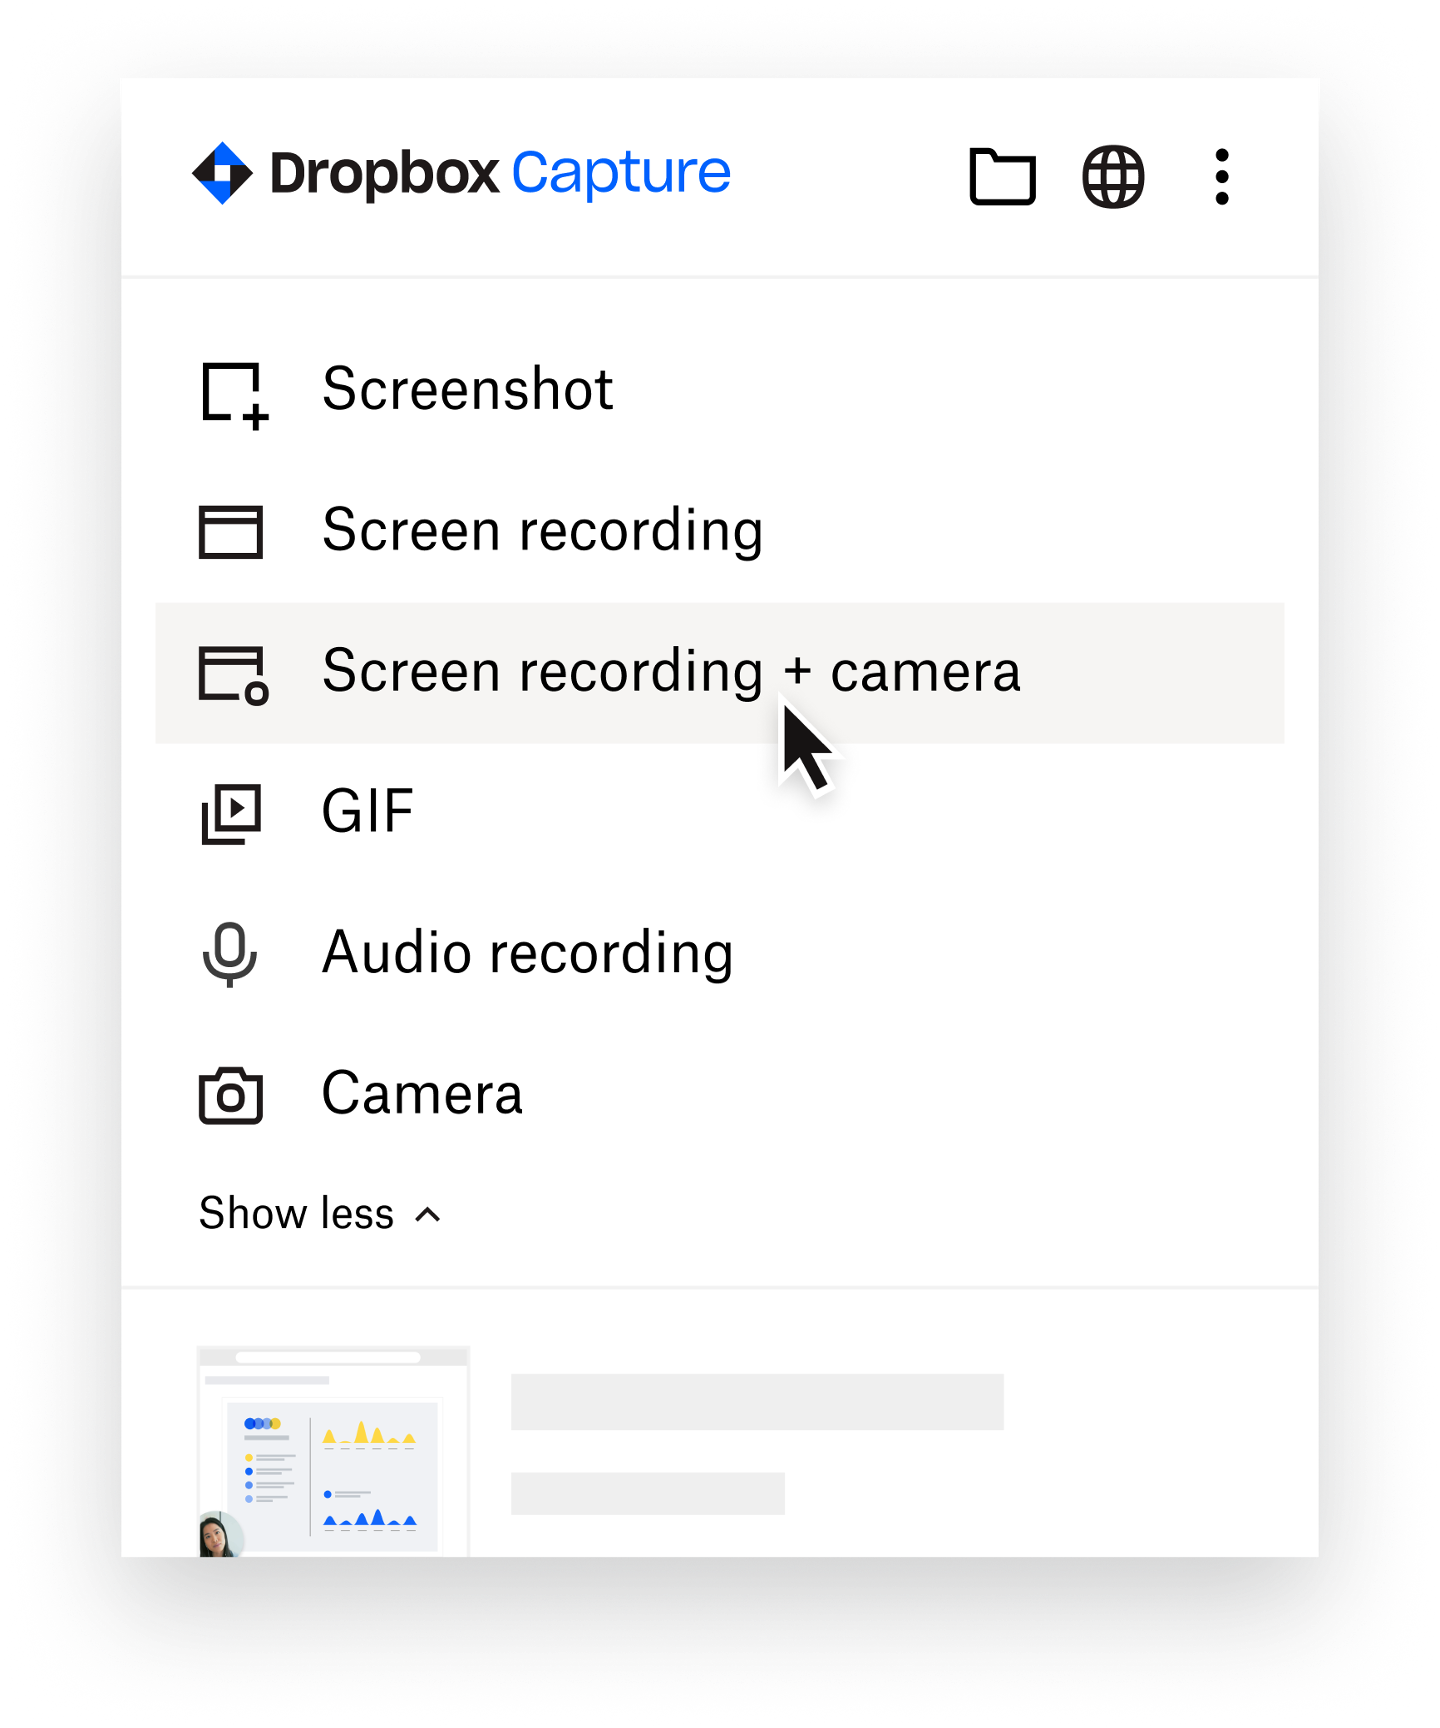 User selecting “screen recording + camera” in the Capture menu